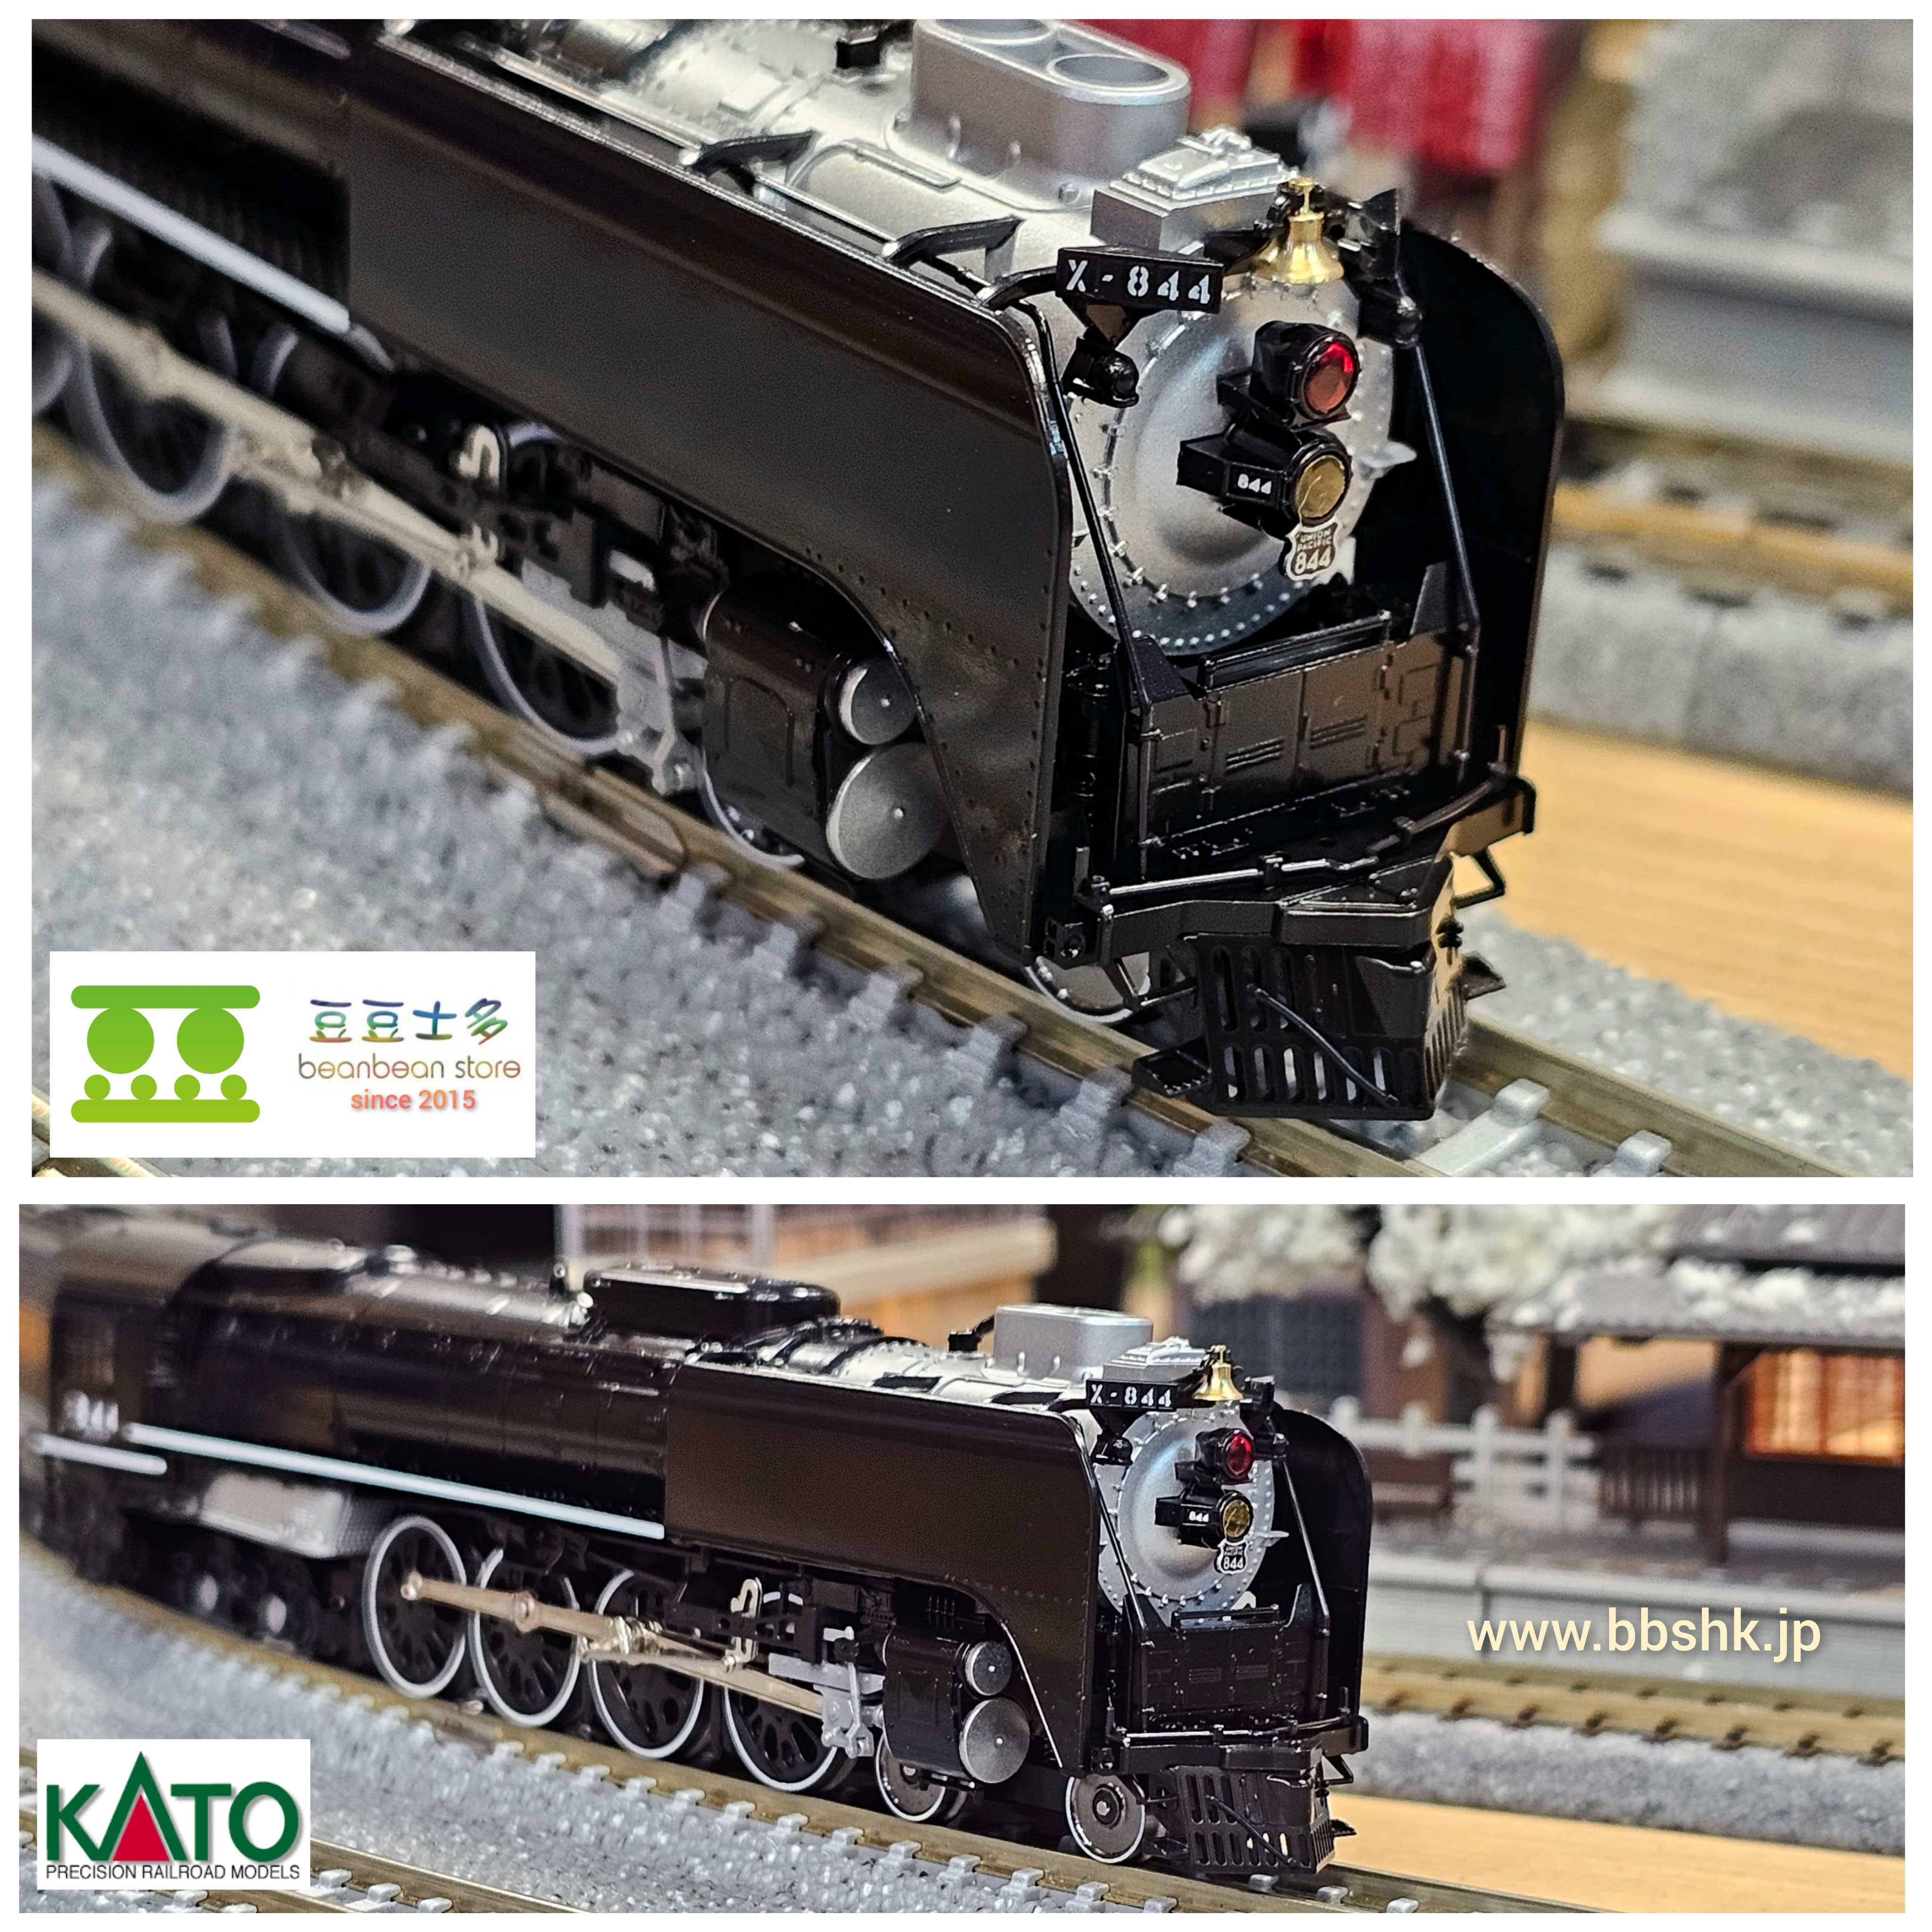 KATO 12605-2 UP FEF-3 蒸気機関車#844 (黒)